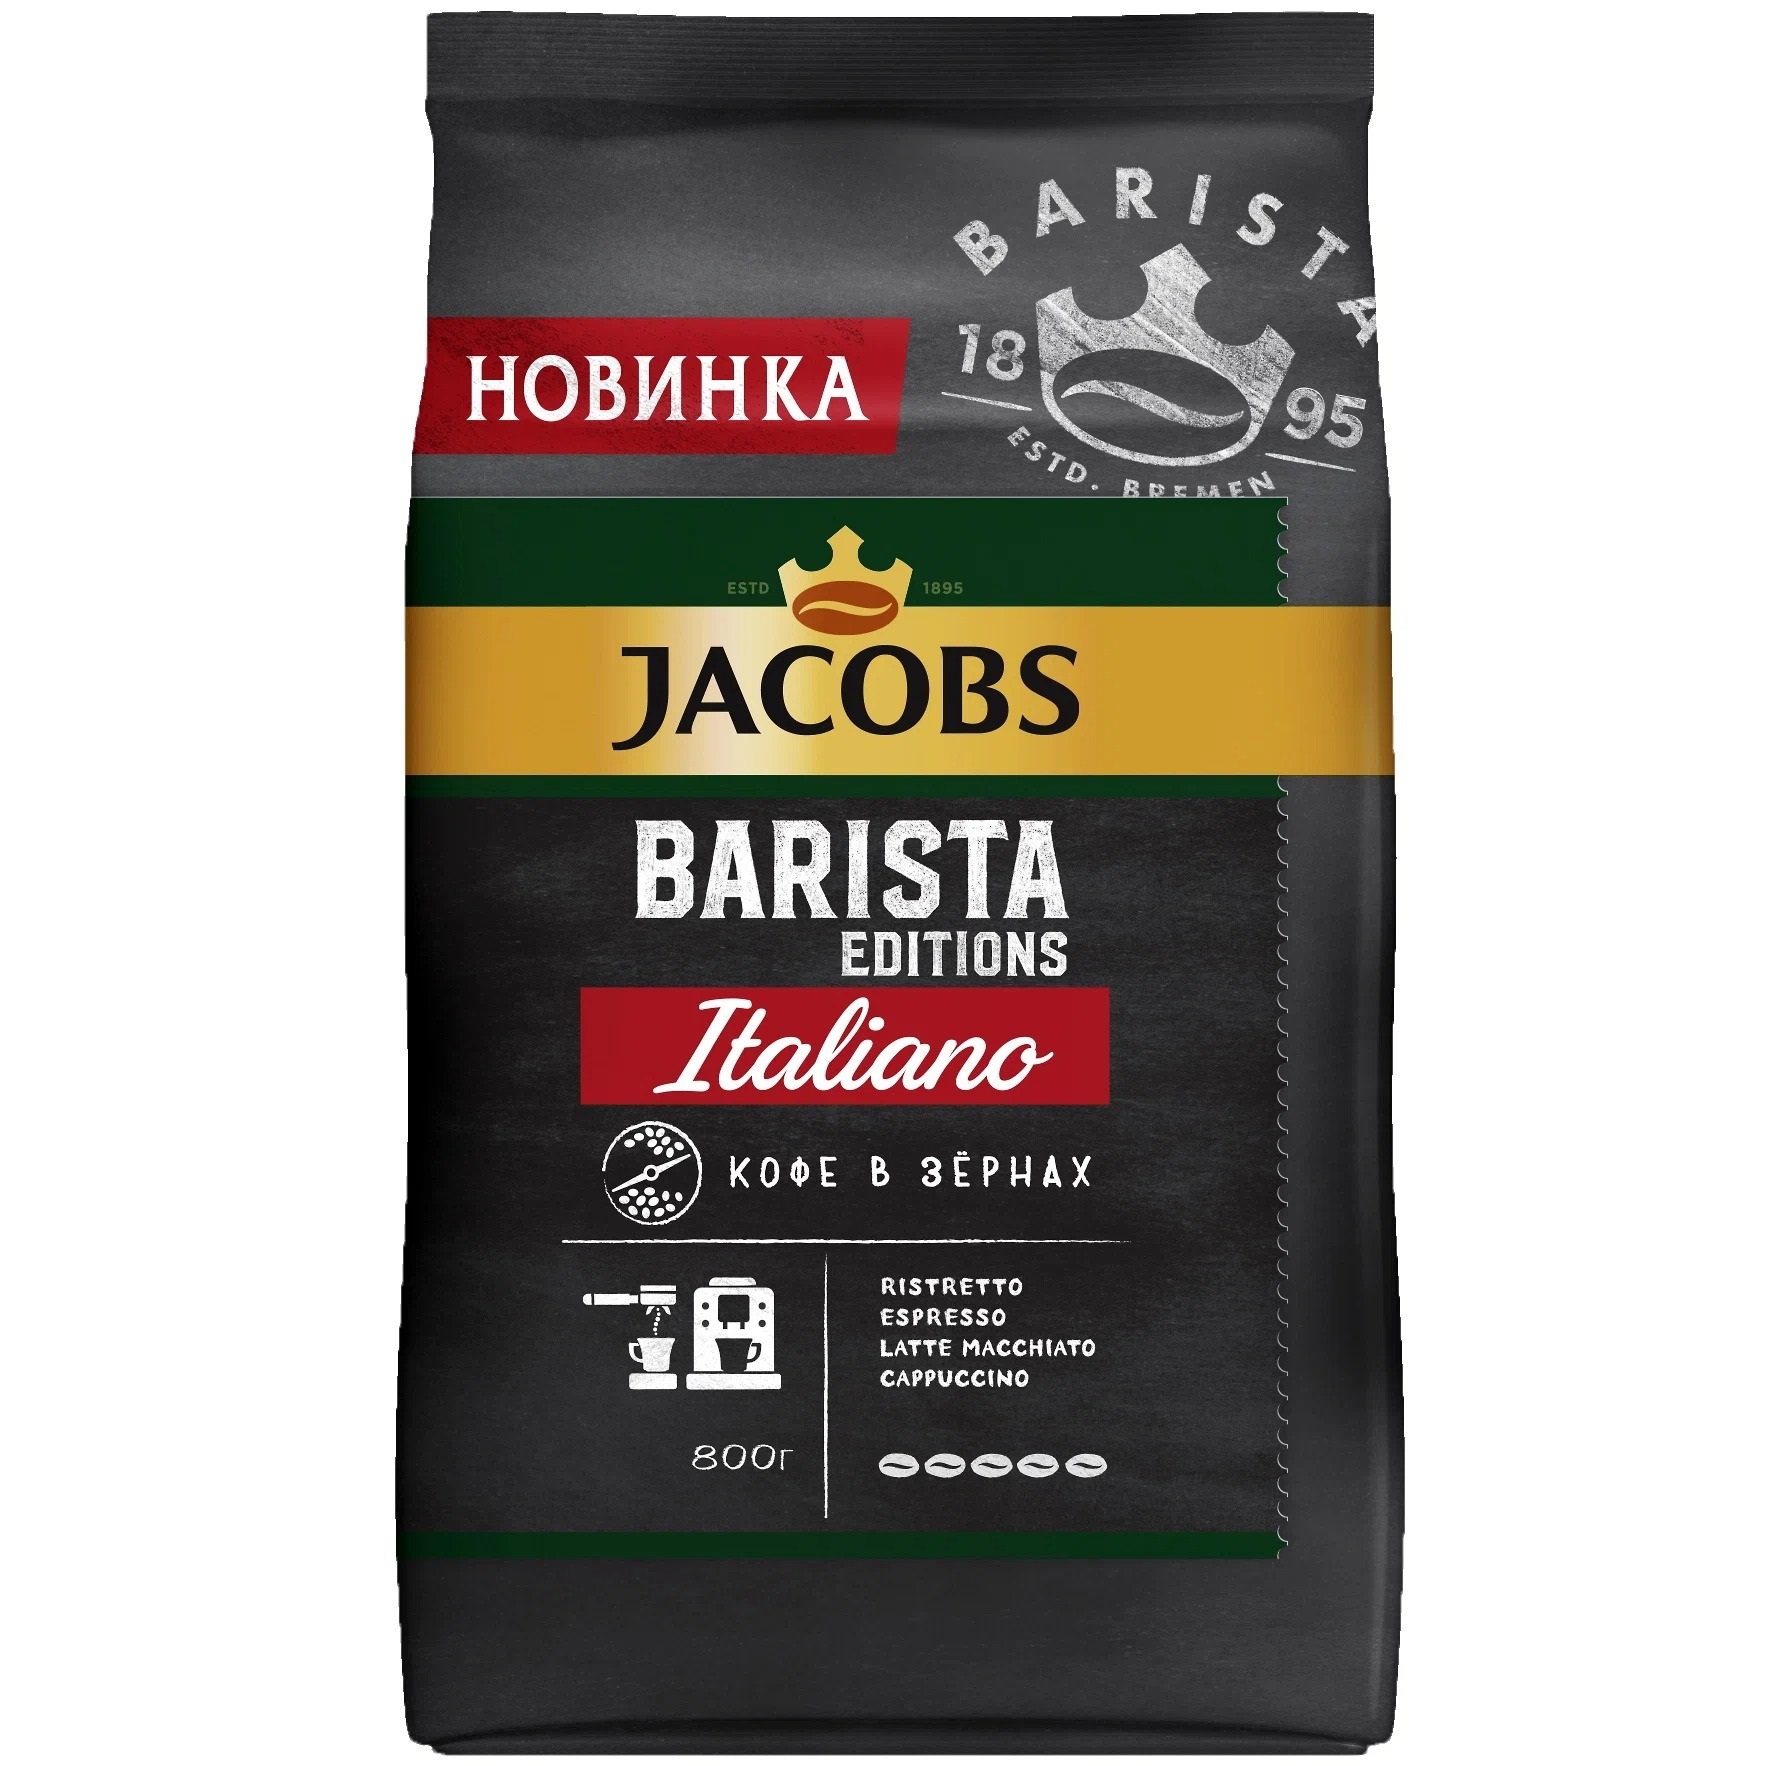 Кофе молотый Jacobs Barista Edition Italiano 800 г кофе в зернах jacobs barista italiano 800г